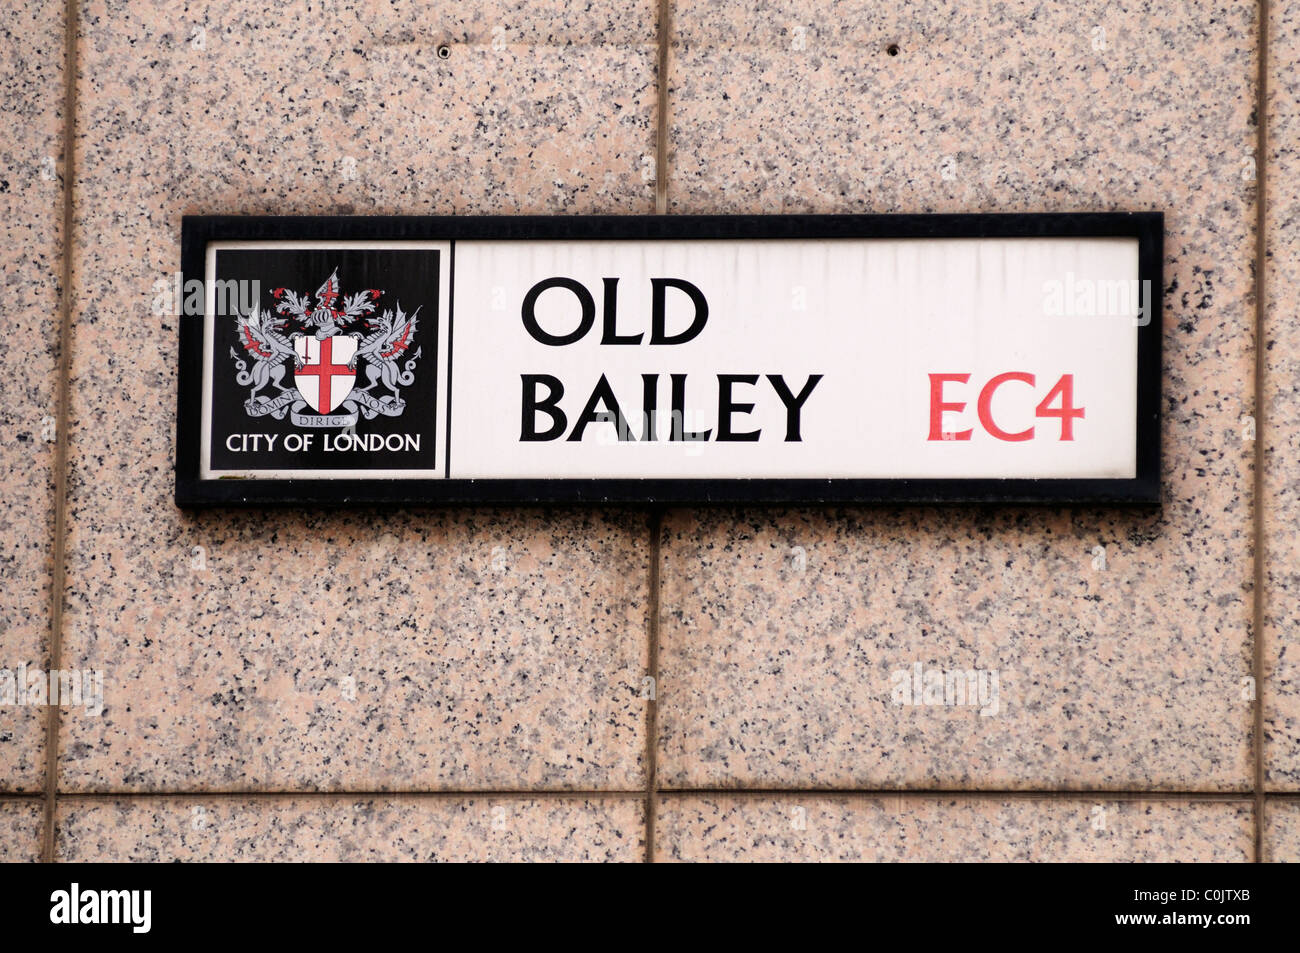 Old Bailey EC4 Street Sign, London, England, UK Stock Photo